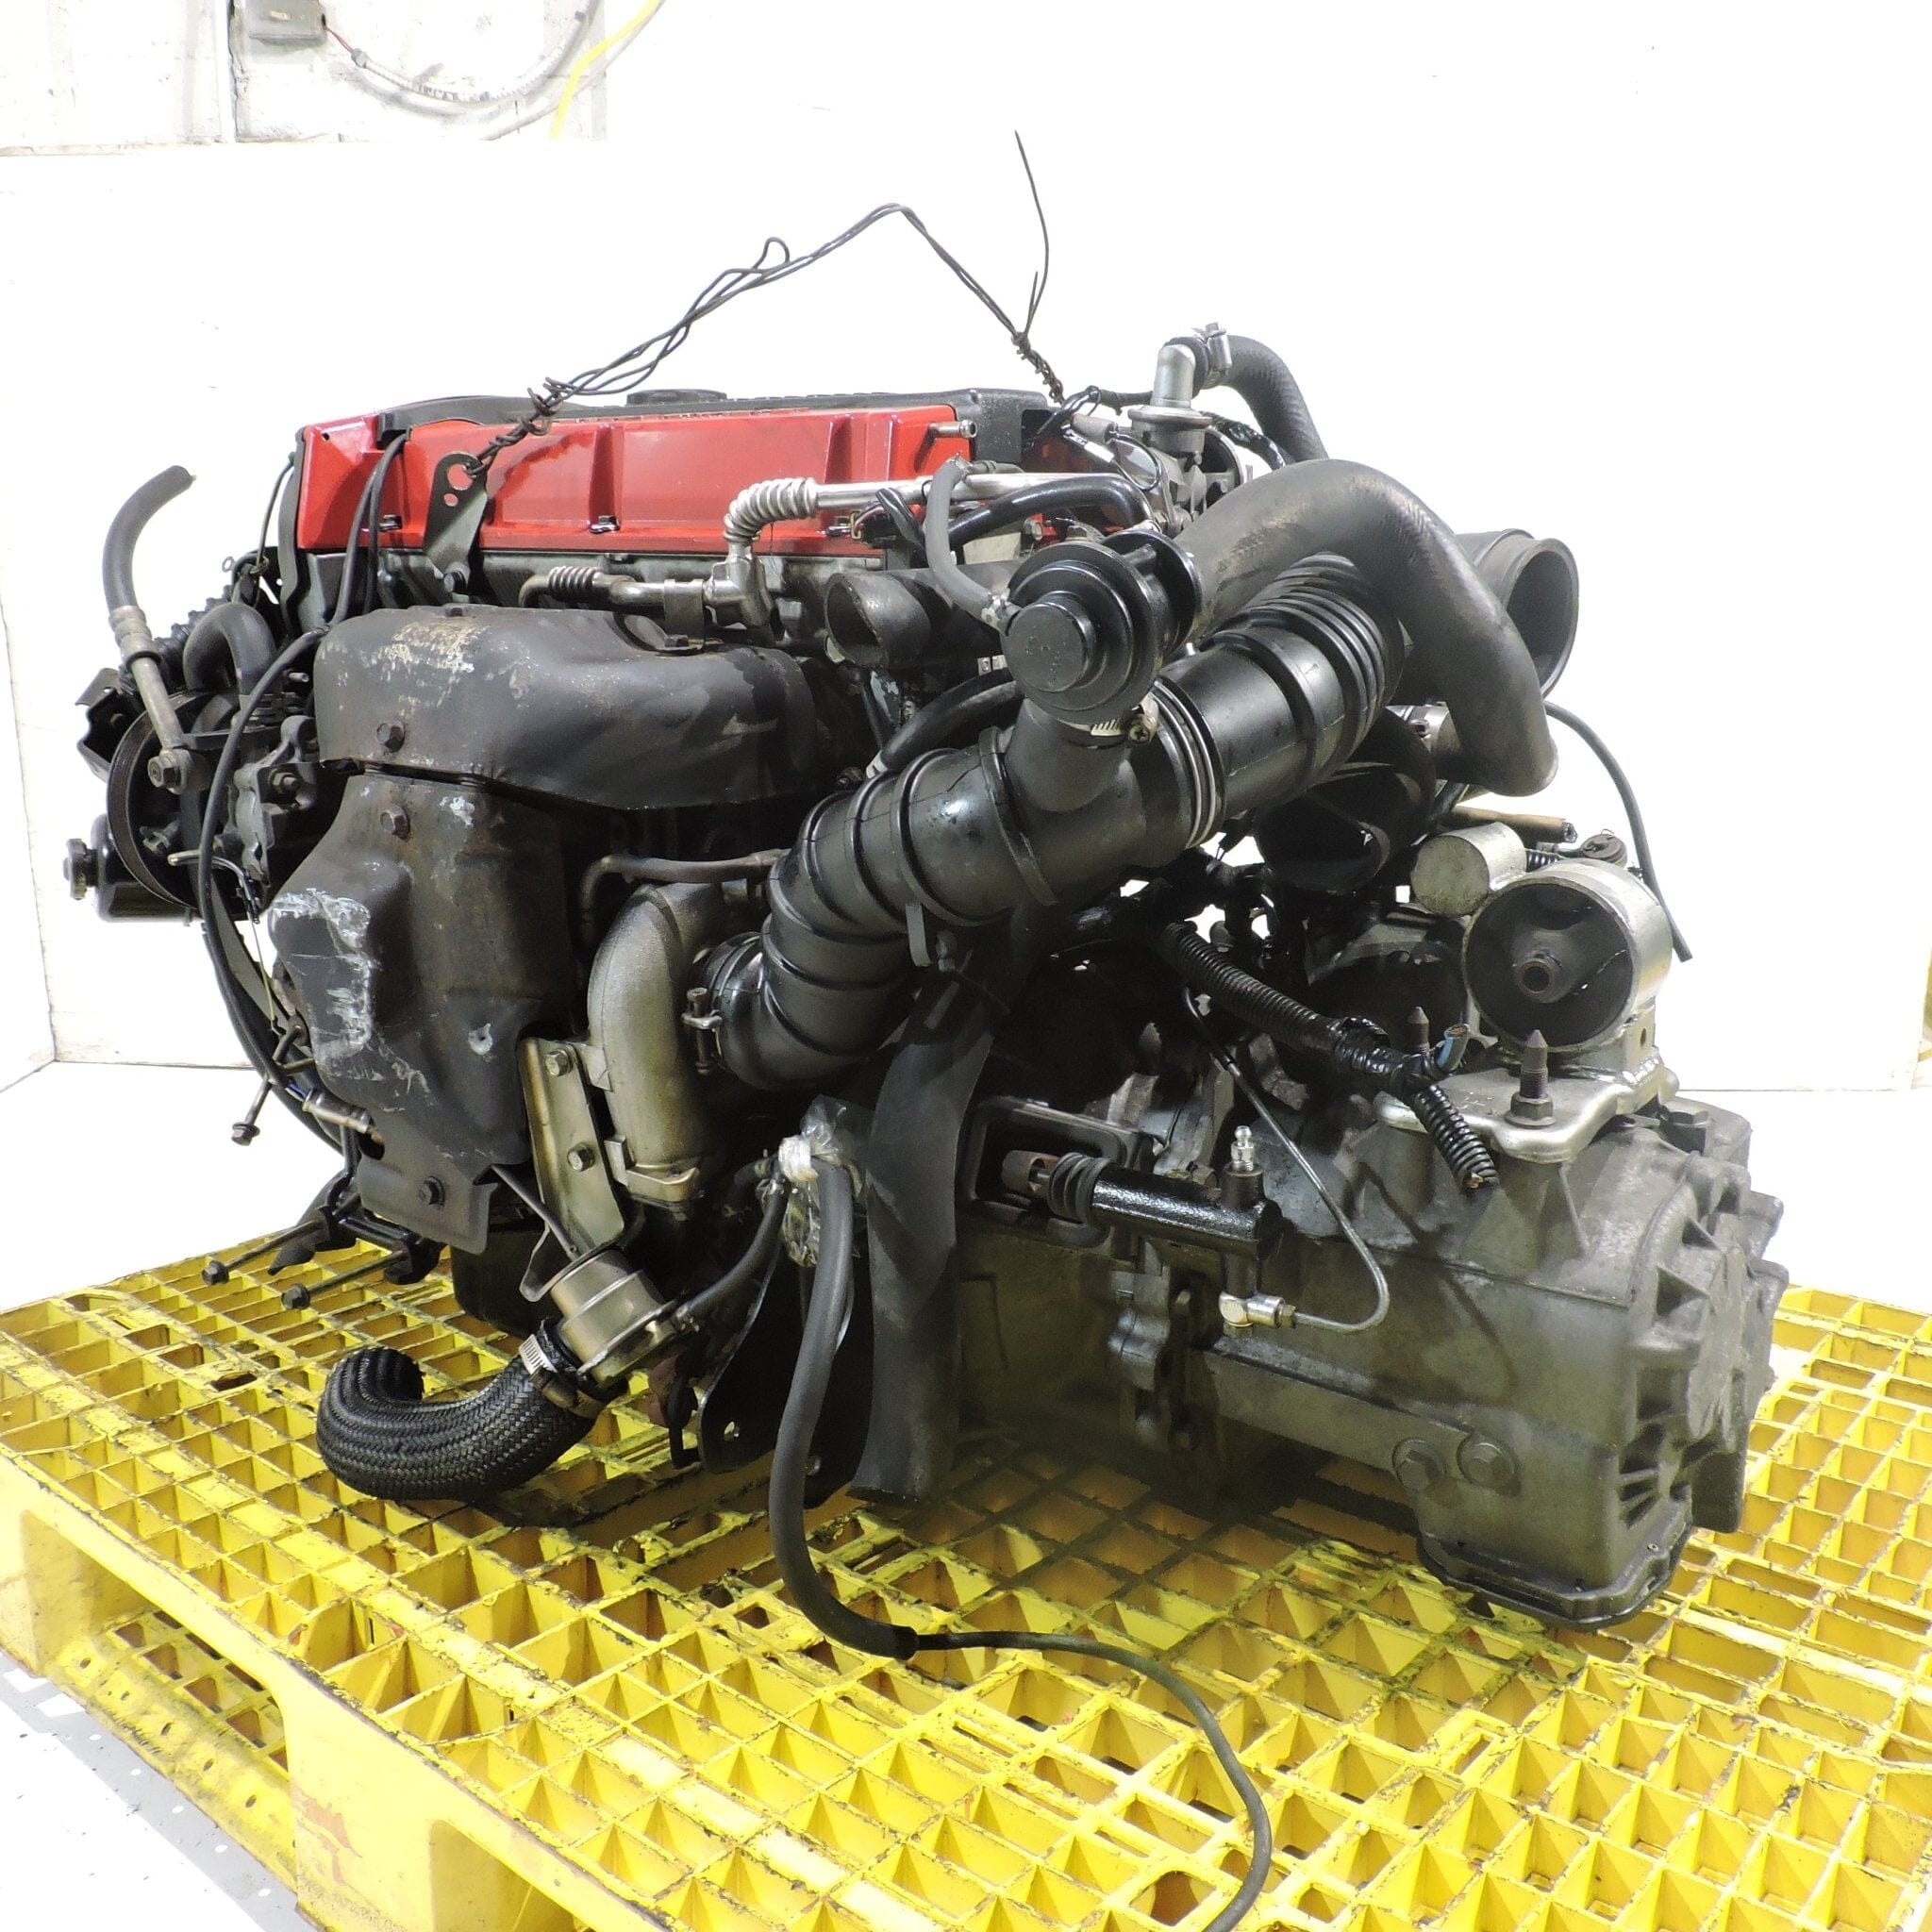 Mitsubishi Evolution 7 VII 8 VIII Turbo 2.0L JDM Engine Transmission Manual Swap - 4G63